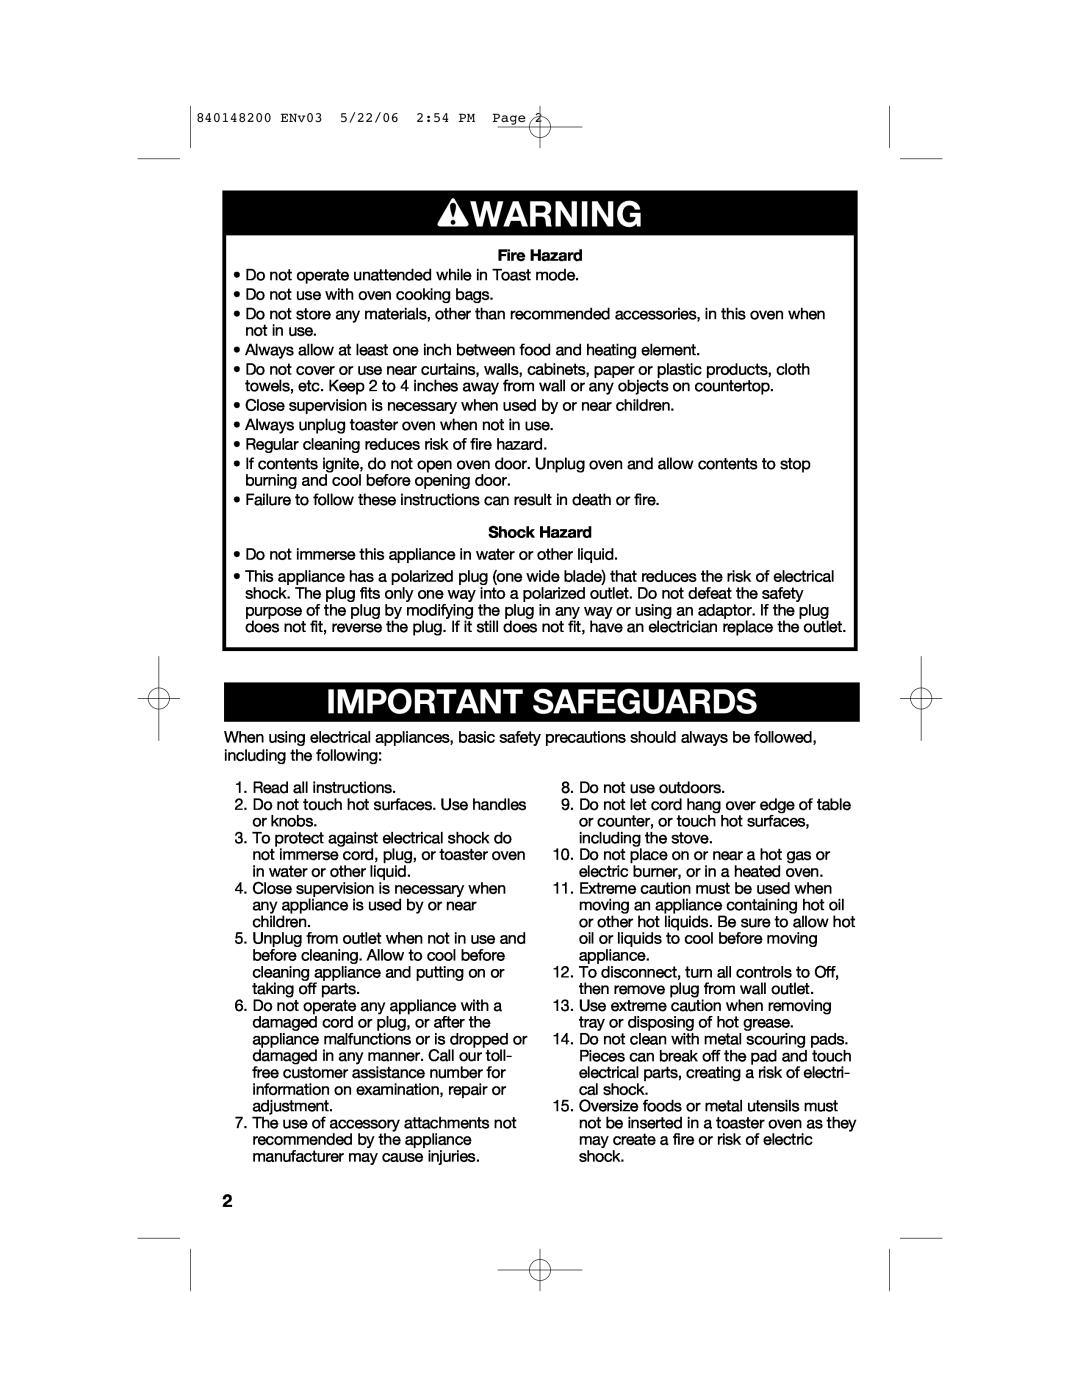 Hamilton Beach 31170, 31177, 31173 manual wWARNING, Important Safeguards, Fire Hazard, Shock Hazard 